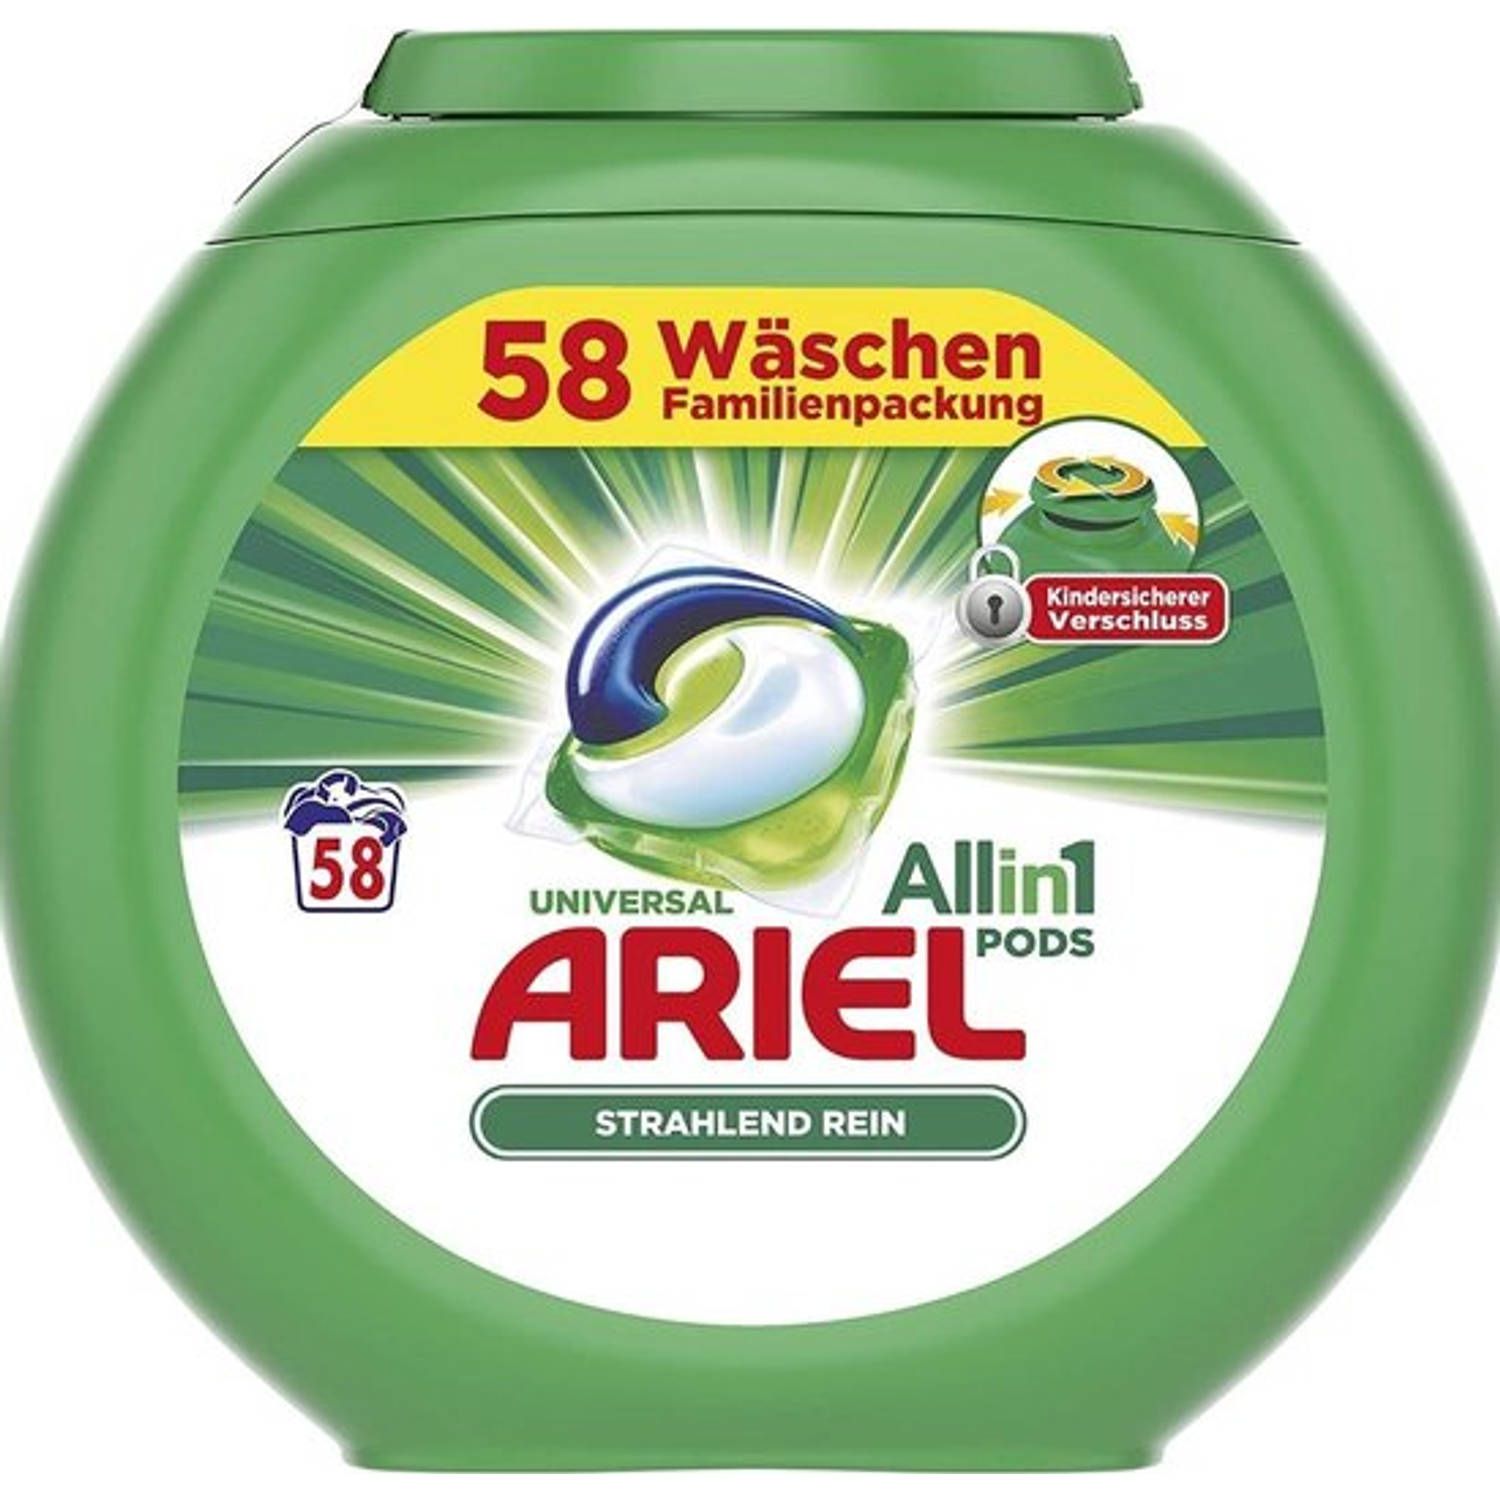 Ariel - 3 In 1 - Universal - 58 Waspods